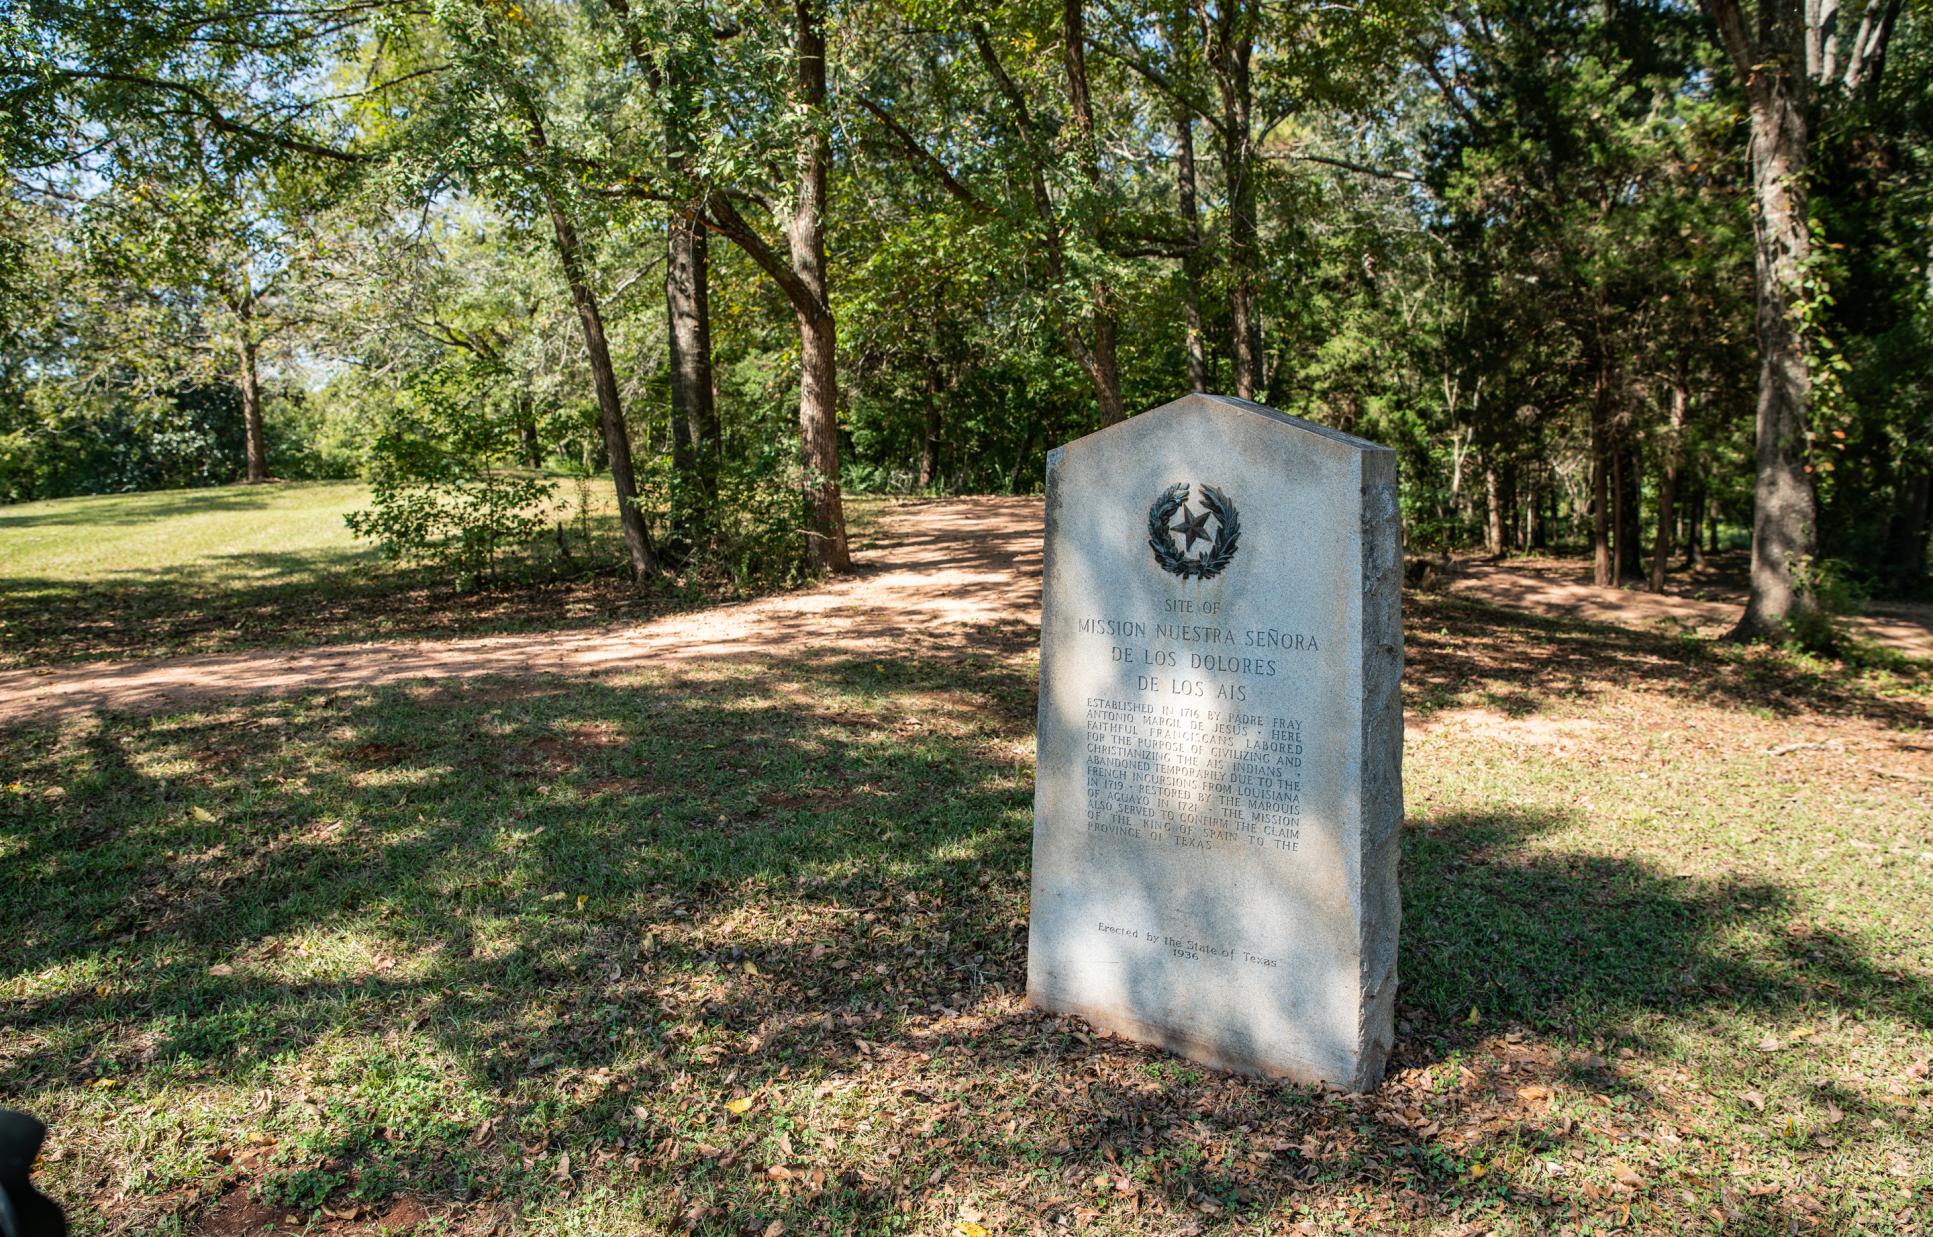 Mission Dolores centennial marker